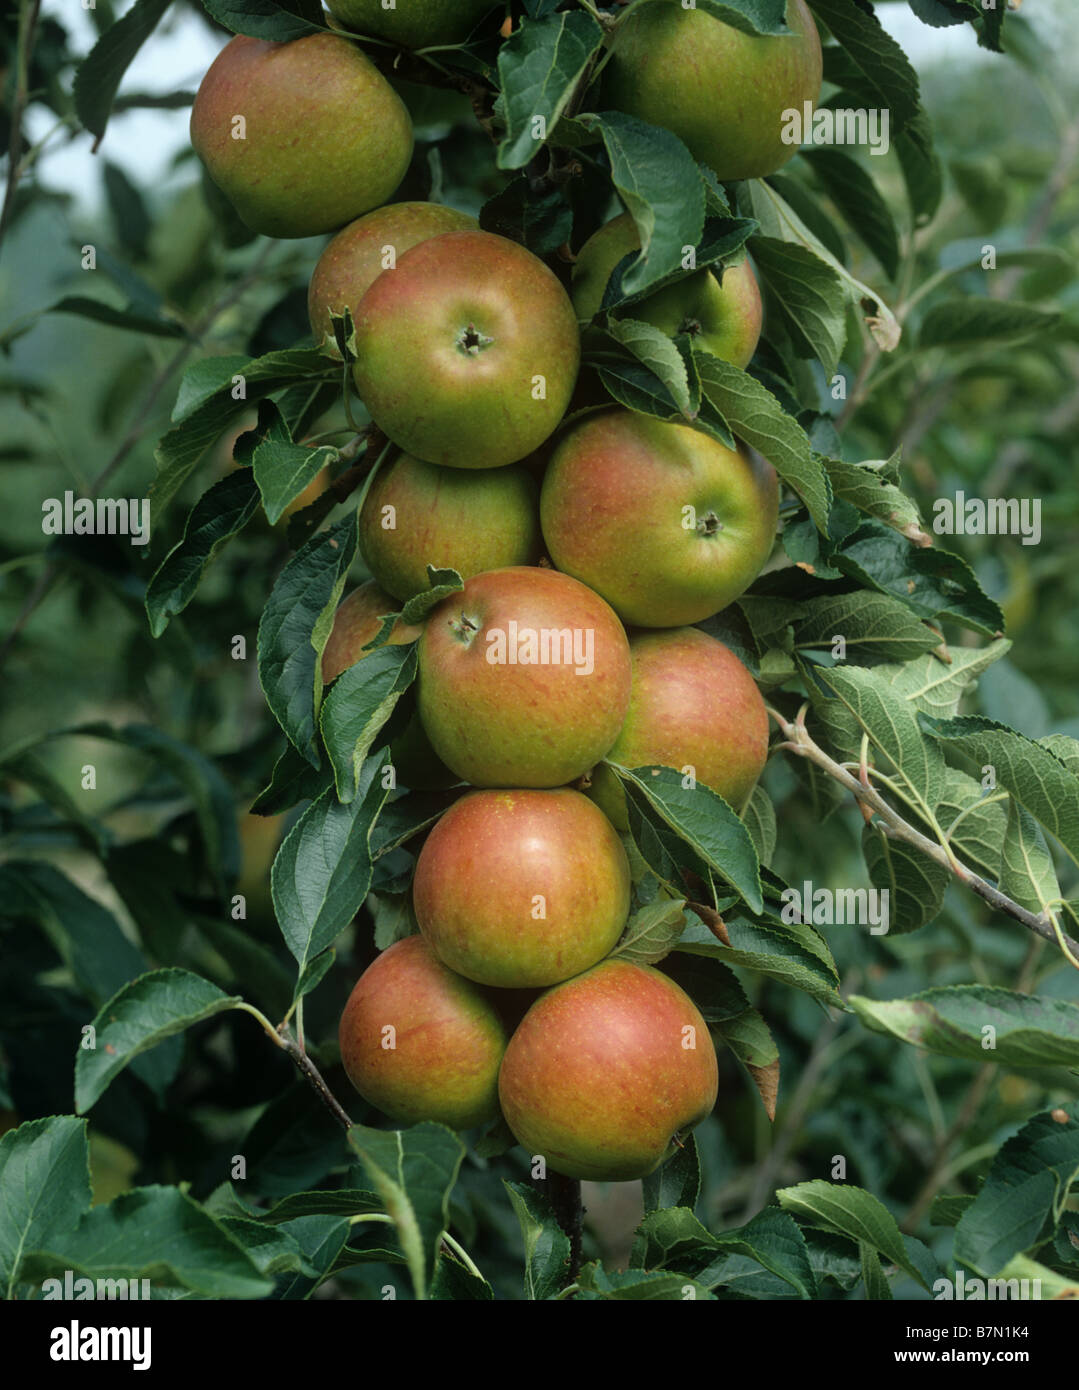 Ripe mature Coxs apple fruit on the tree Oxfordshire Stock Photo